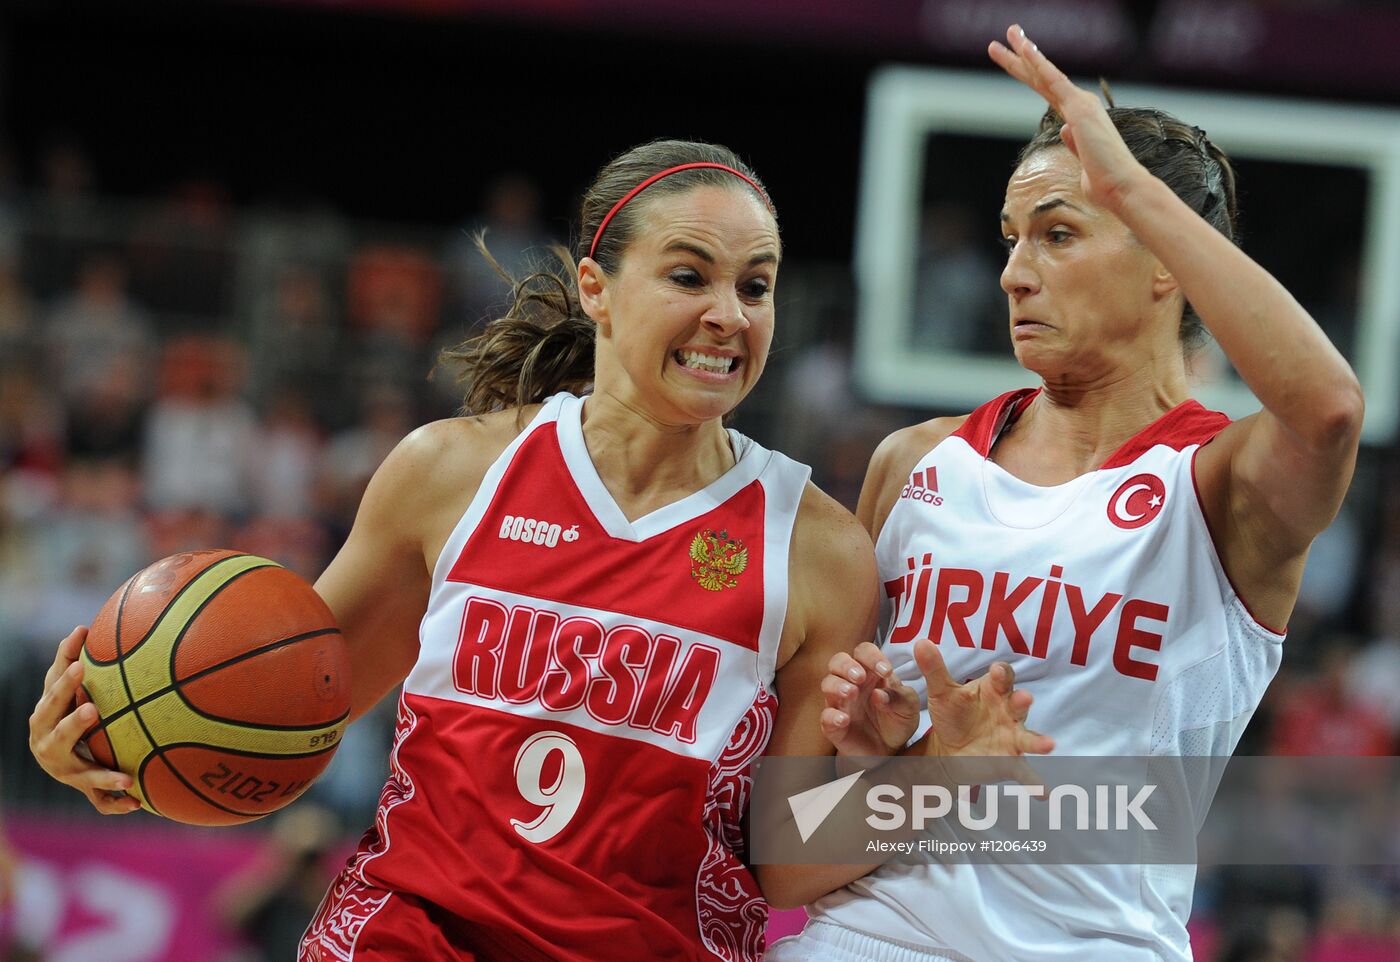 Olympics 2012 Women's Basketball. Turkey vs. Russia